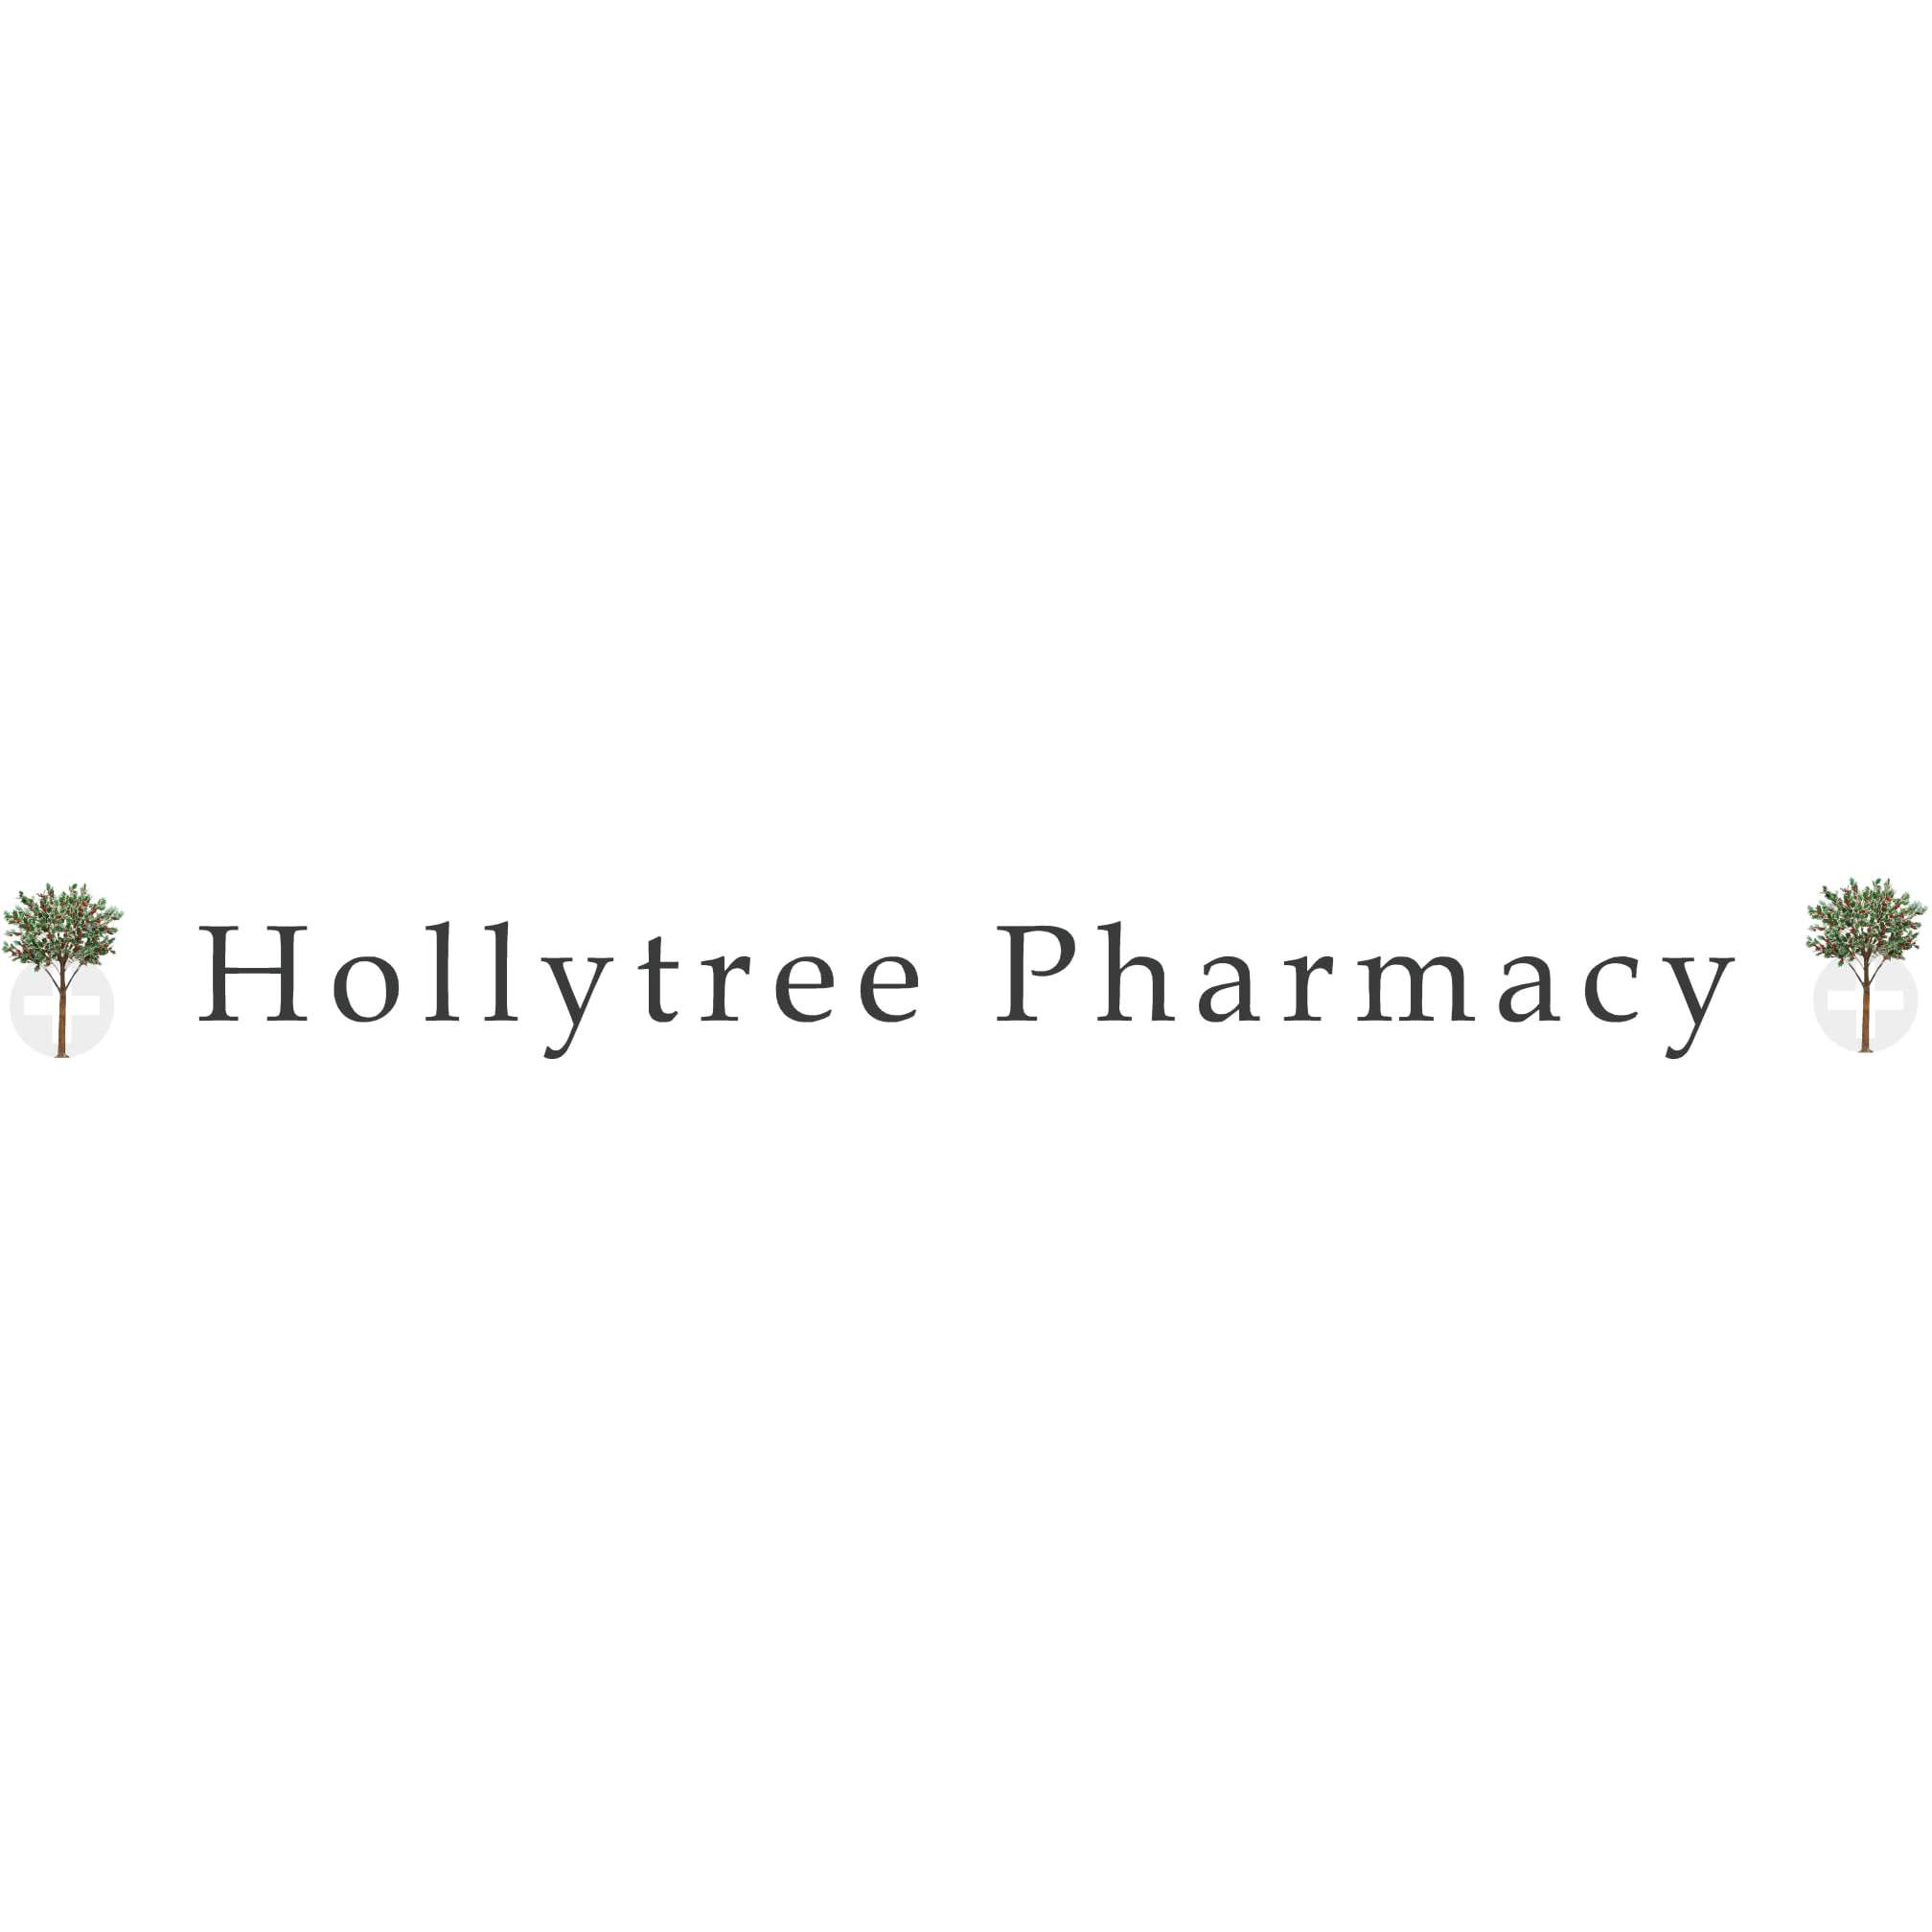 Hollytree Pharmacy - Sidcup, London DA14 6JR - 020 8300 6857 | ShowMeLocal.com